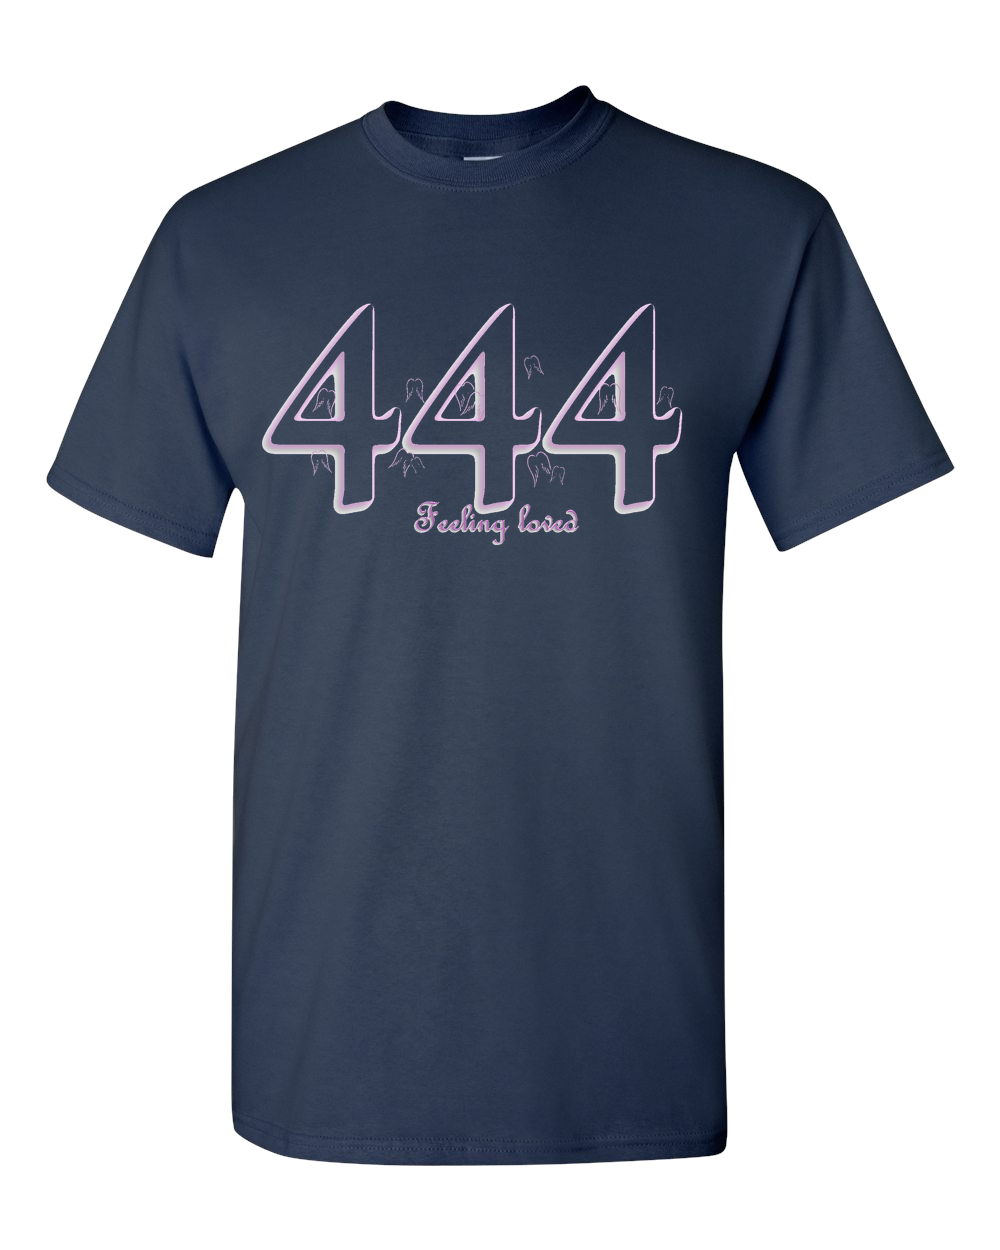 444 T-shirt Spiritual Guide Angel numbers